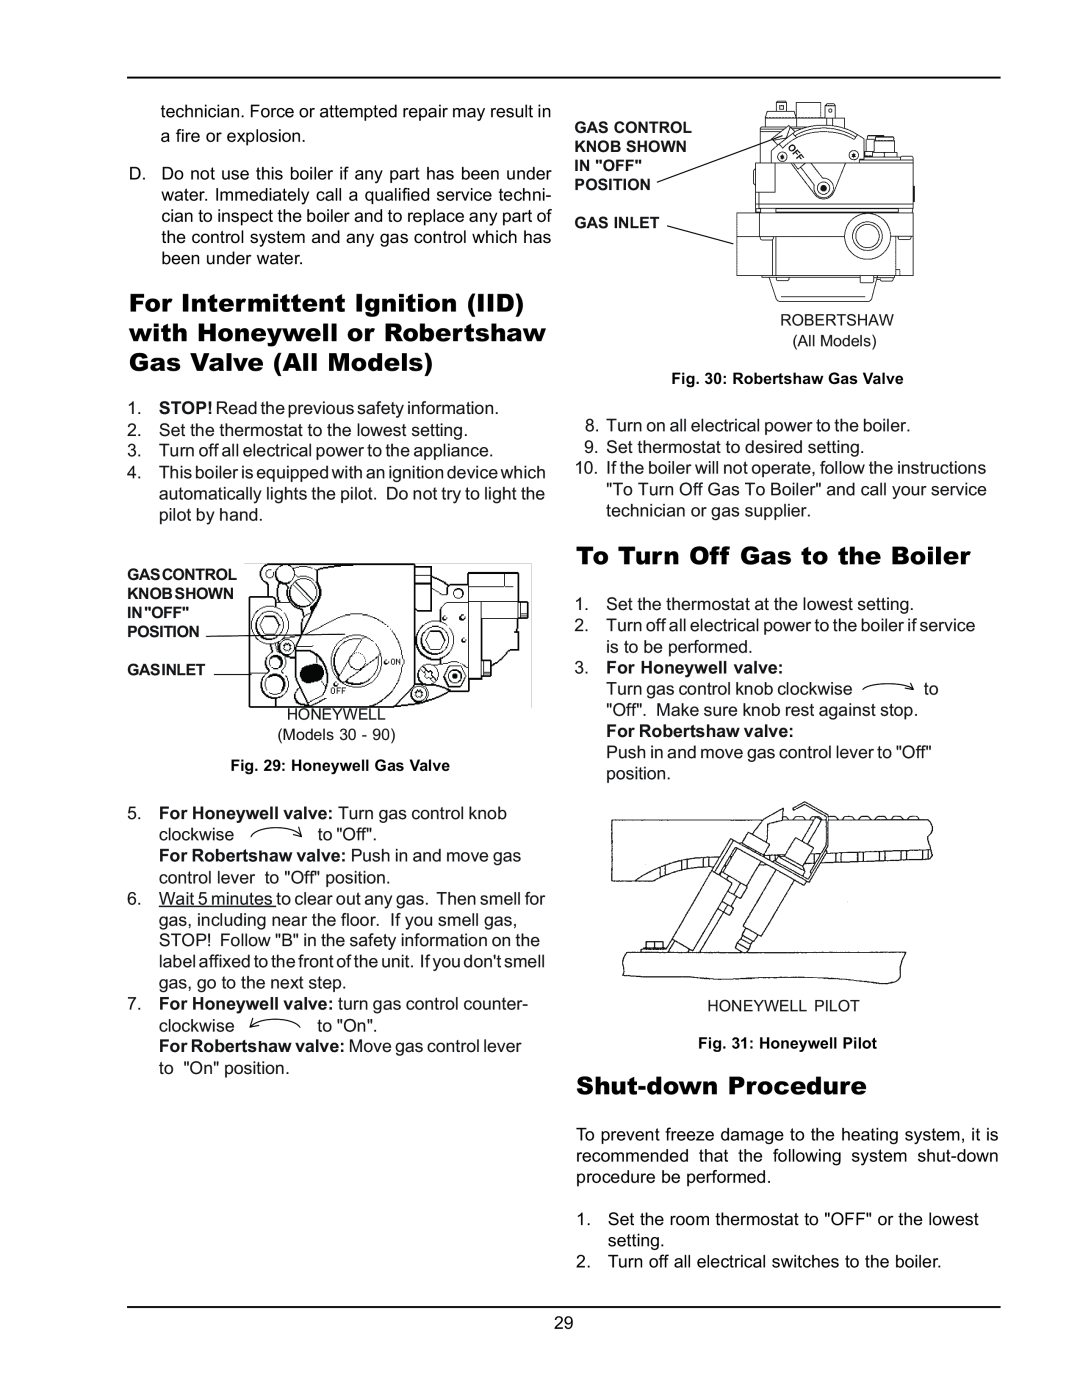 Raypak 0180B Type H manual To Turn Off Gas to the Boiler, Shut-downProcedure, For Honeywell valve Turn gas control knob 